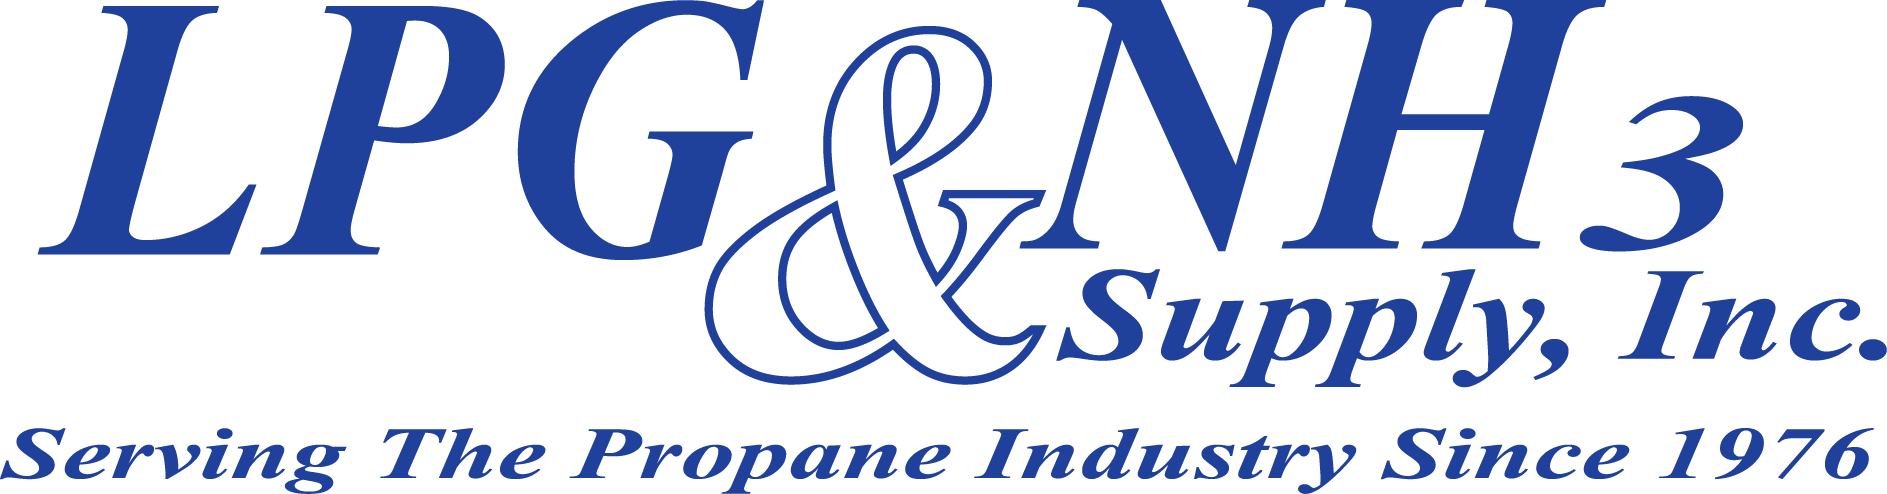 LPG & NH3 Supply, Inc. Logo